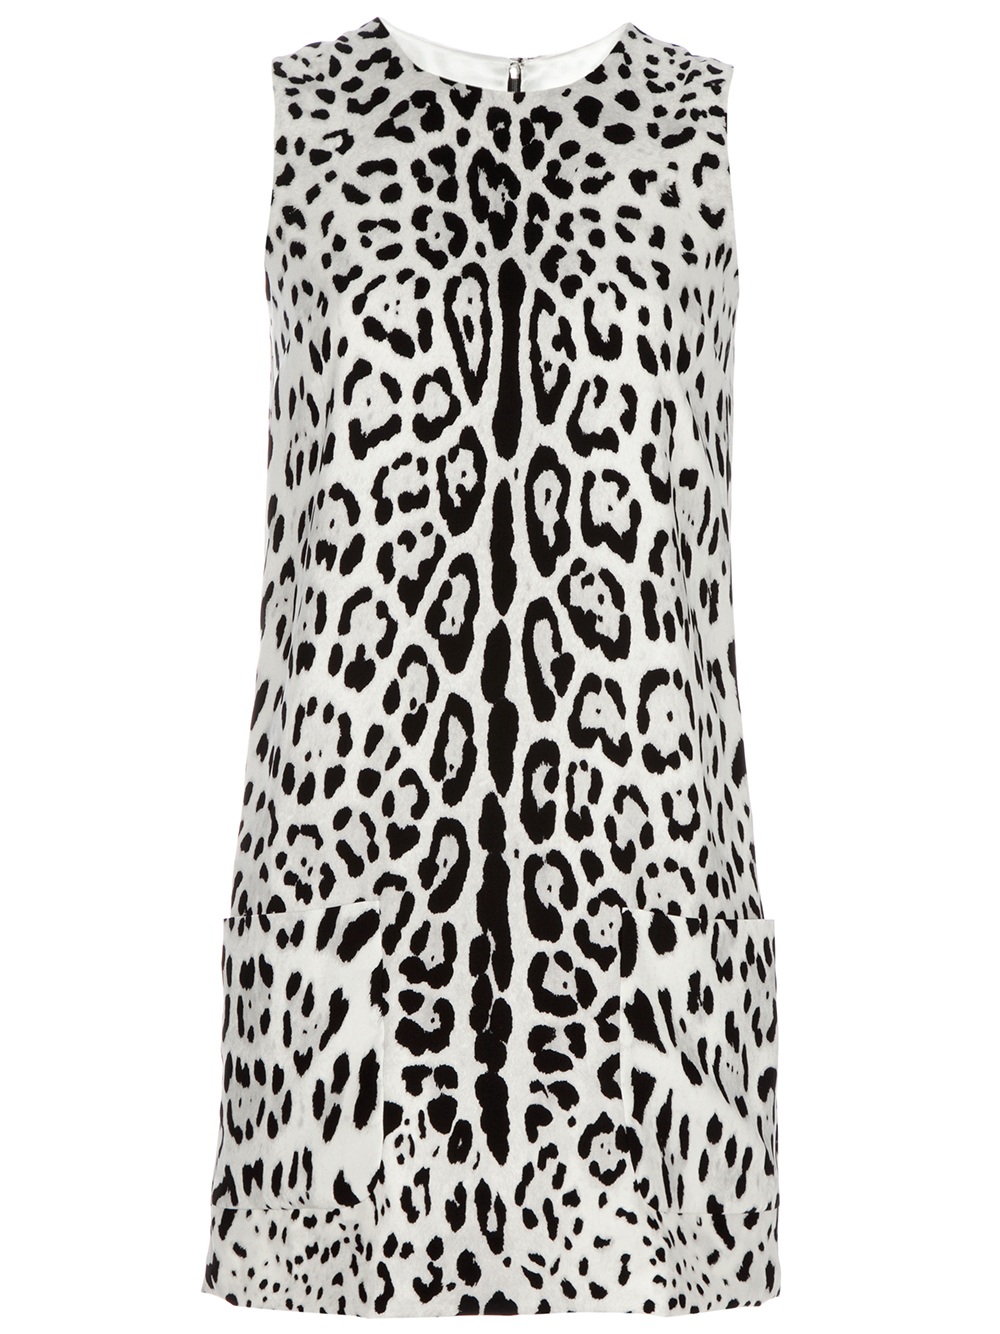 Dolce & Gabbana Leopard Print Dress in Animal (leopard) | Lyst